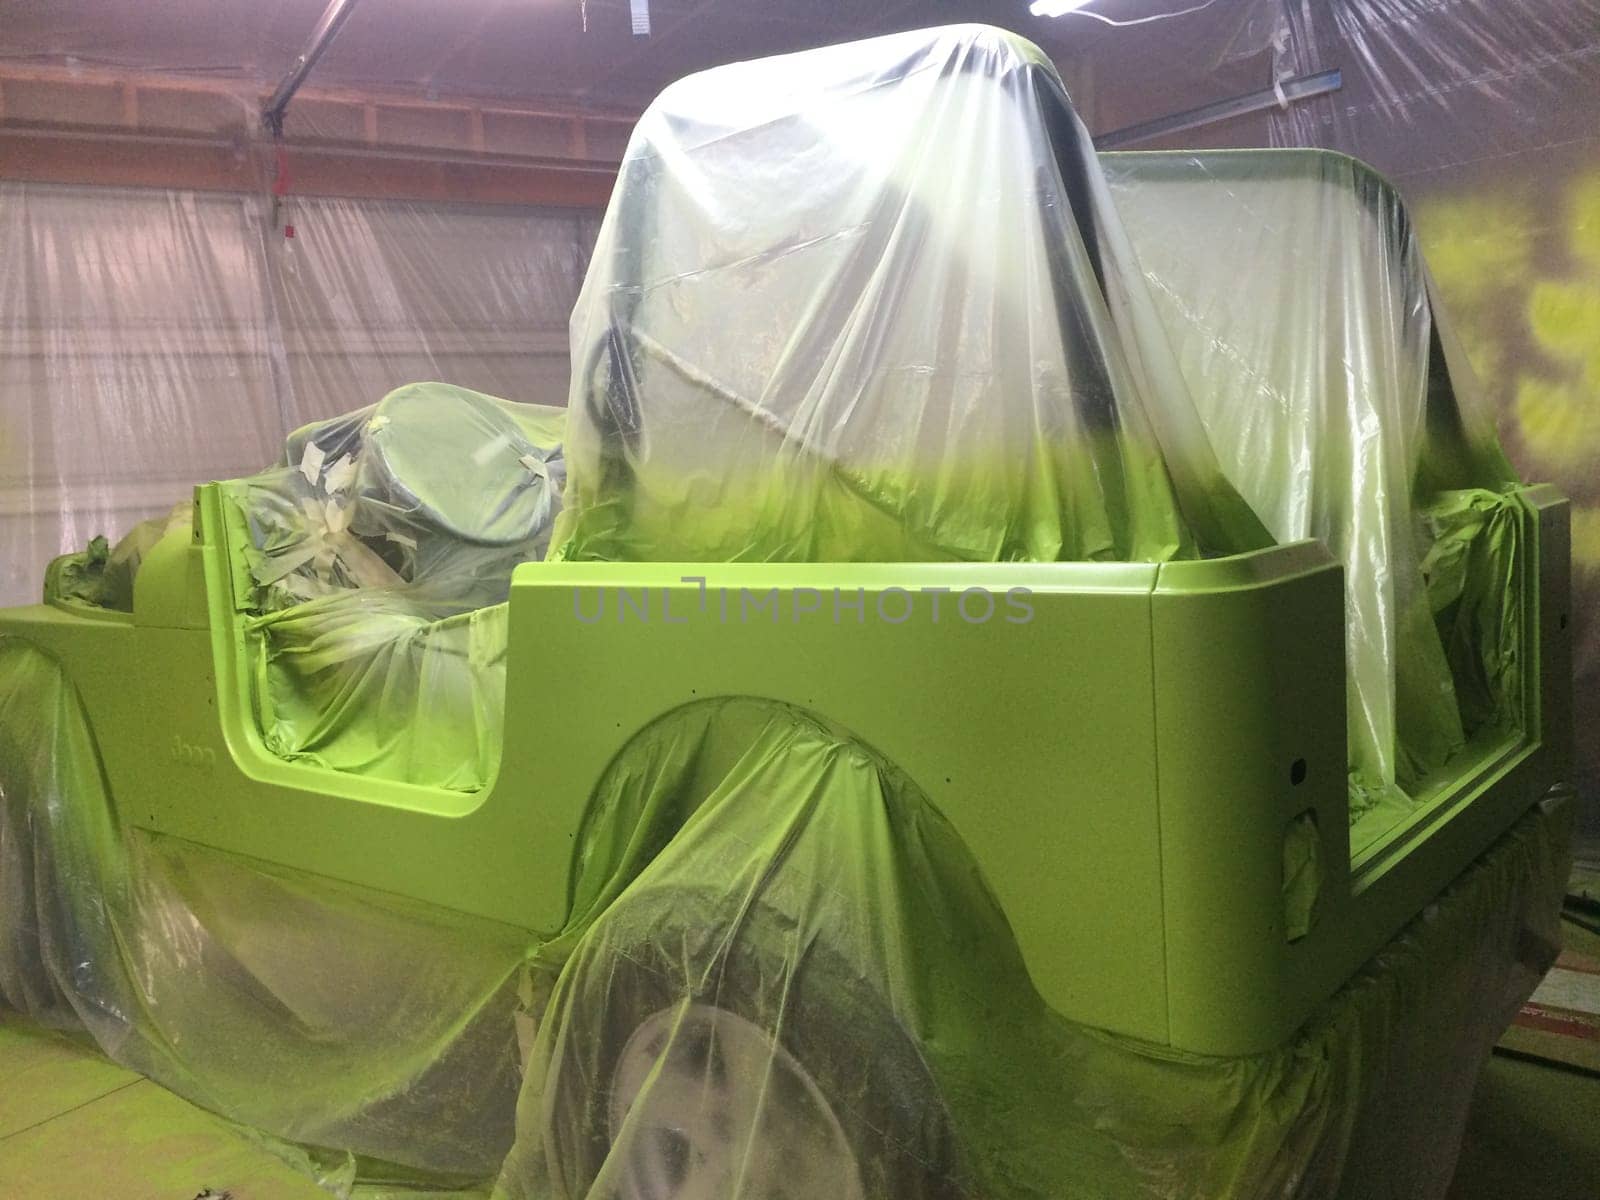 Auto Body Restoration, Lime Green Paint Job, 1990s Vehicle . High quality photo